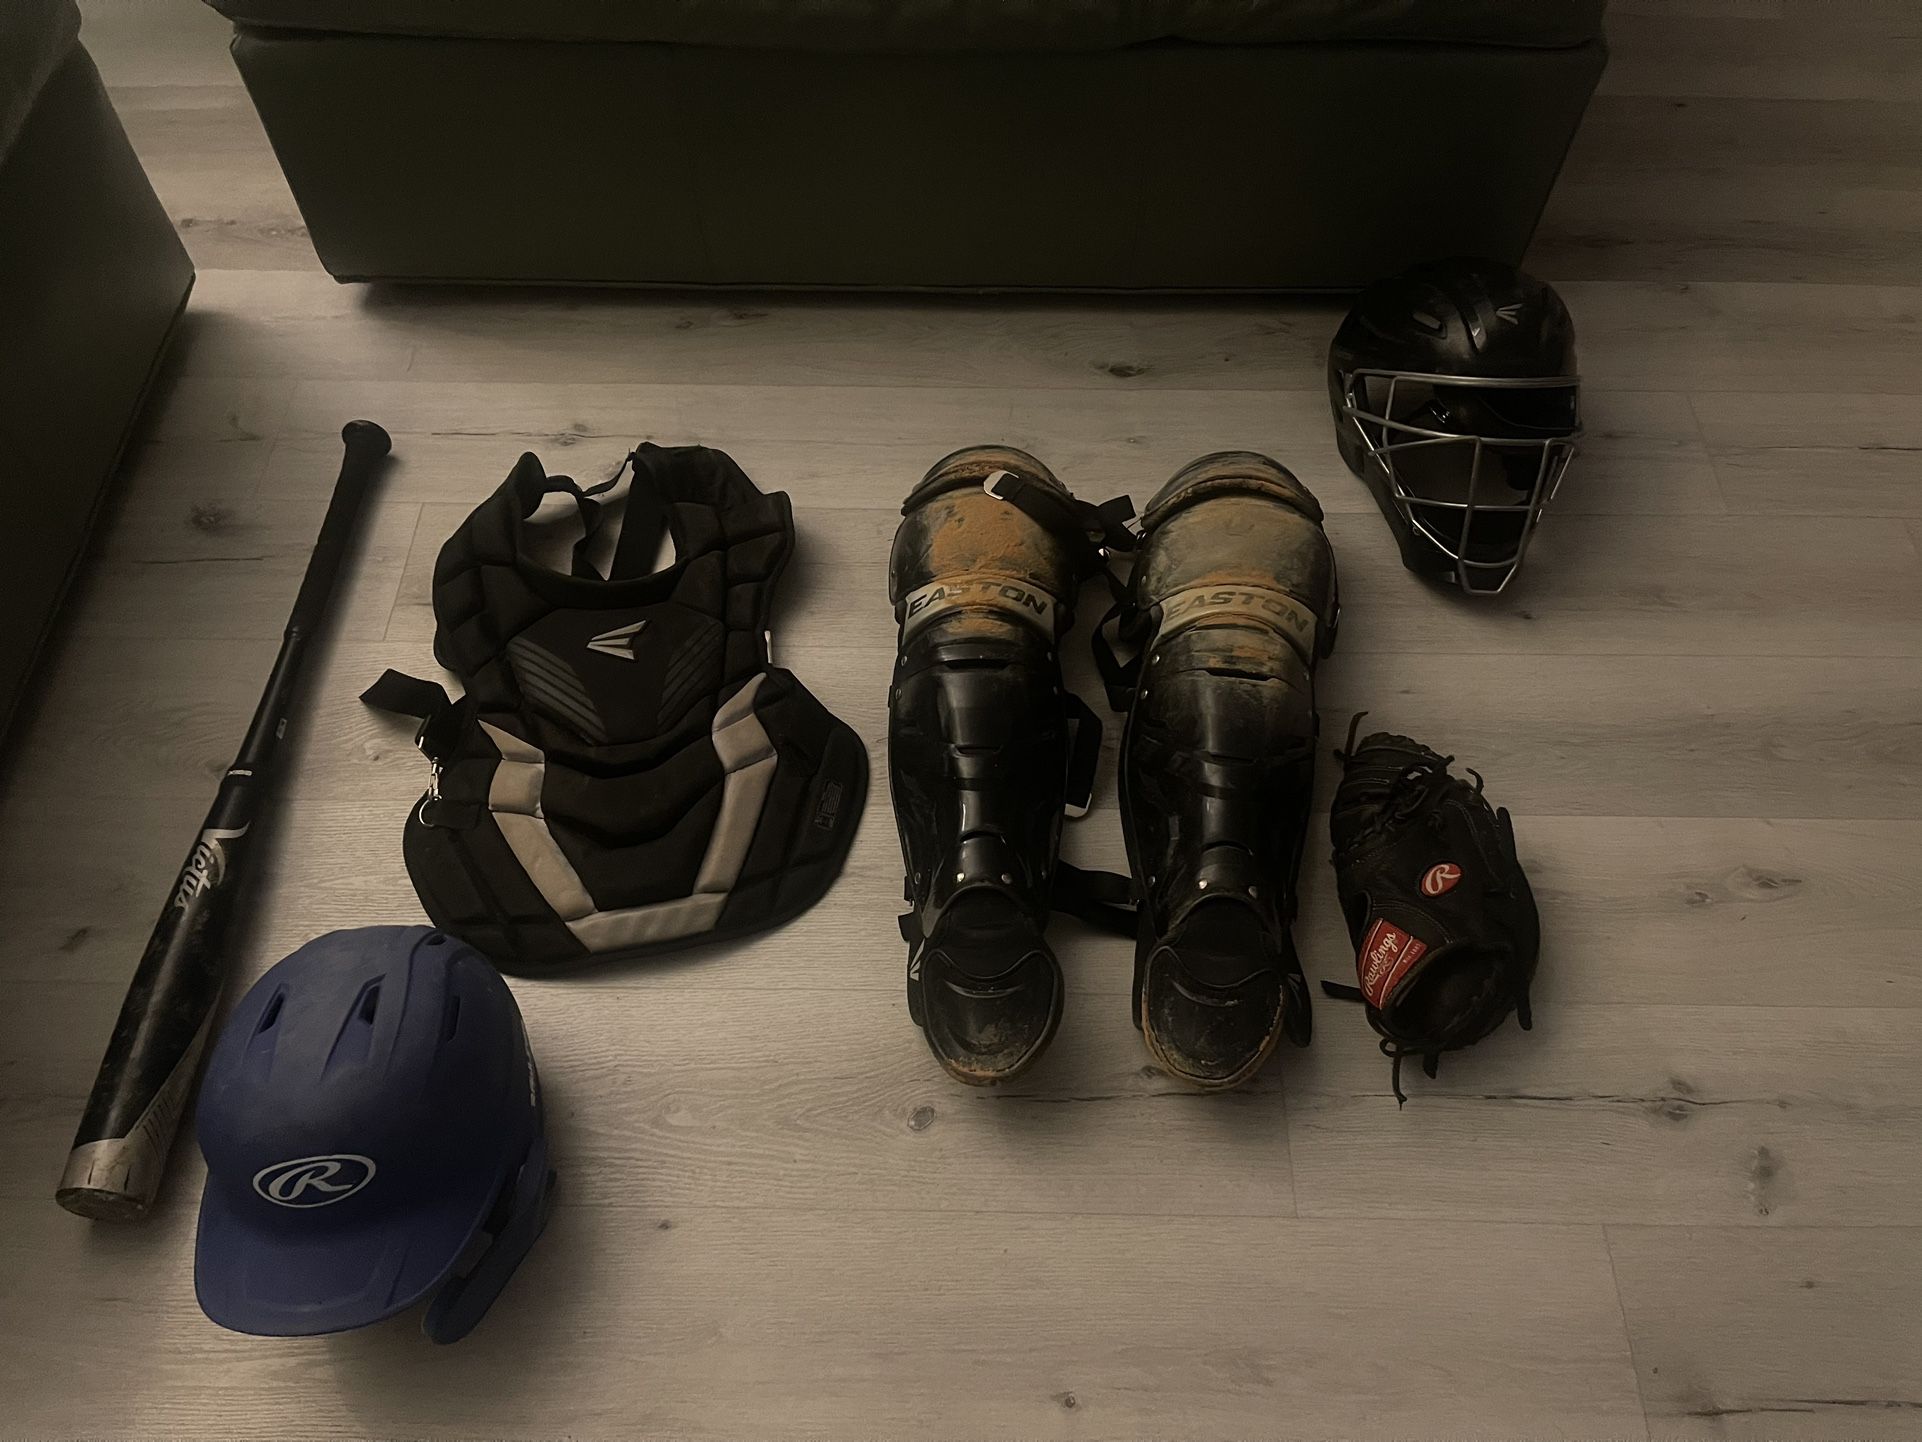  Baseball Catchers Gear With Glove, Bat And Helmet